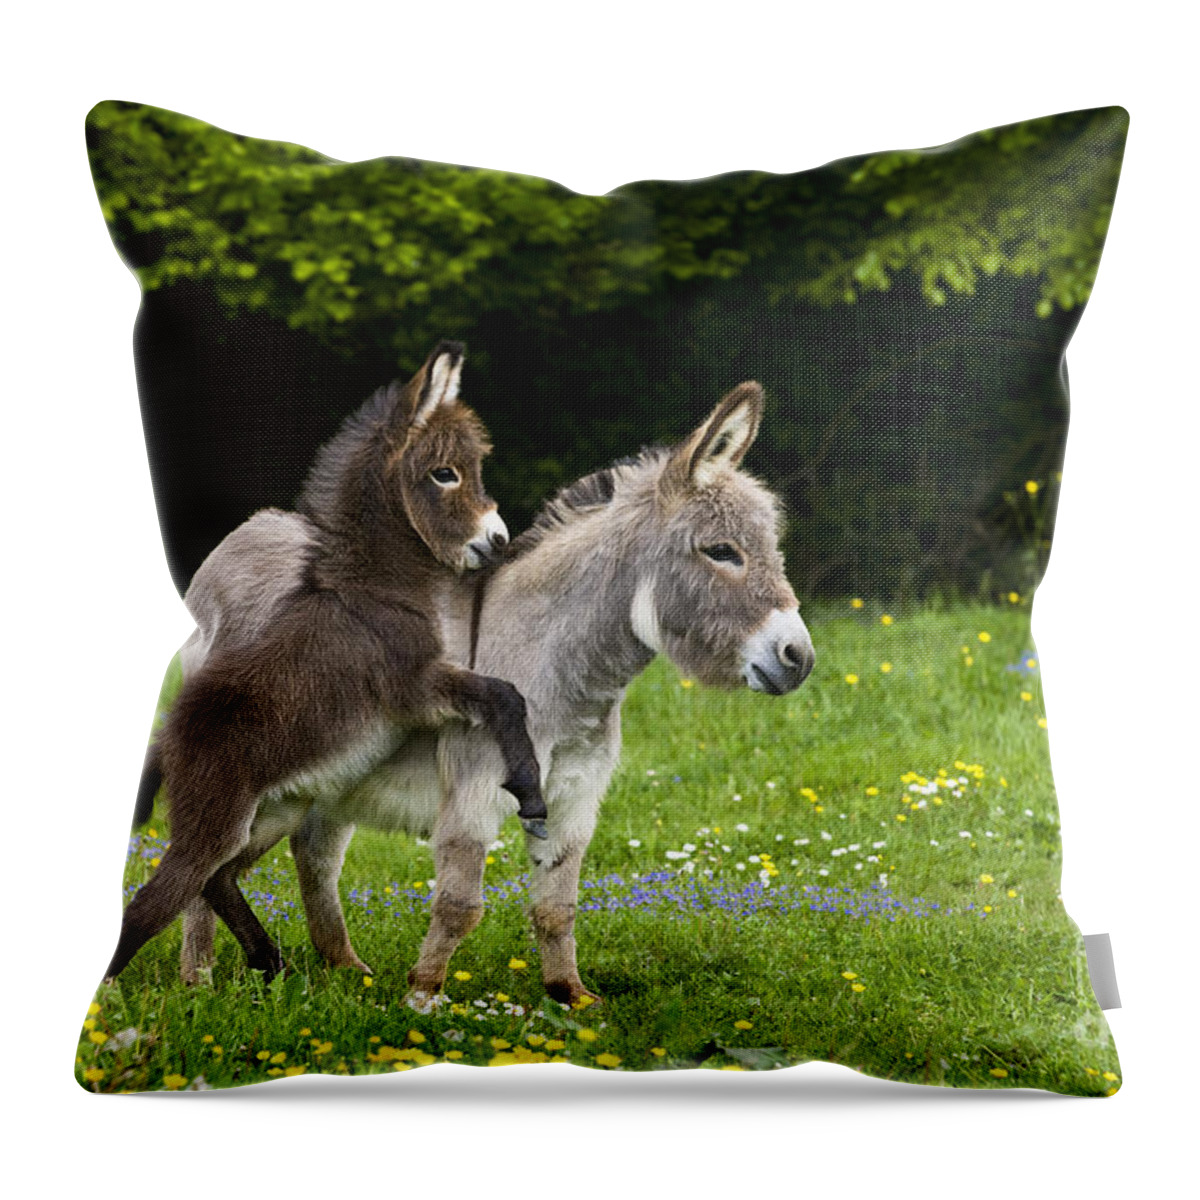 Miniature Donkey Throw Pillow featuring the photograph Miniature Donkeys #1 by Jean-Louis Klein & Marie-Luce Hubert